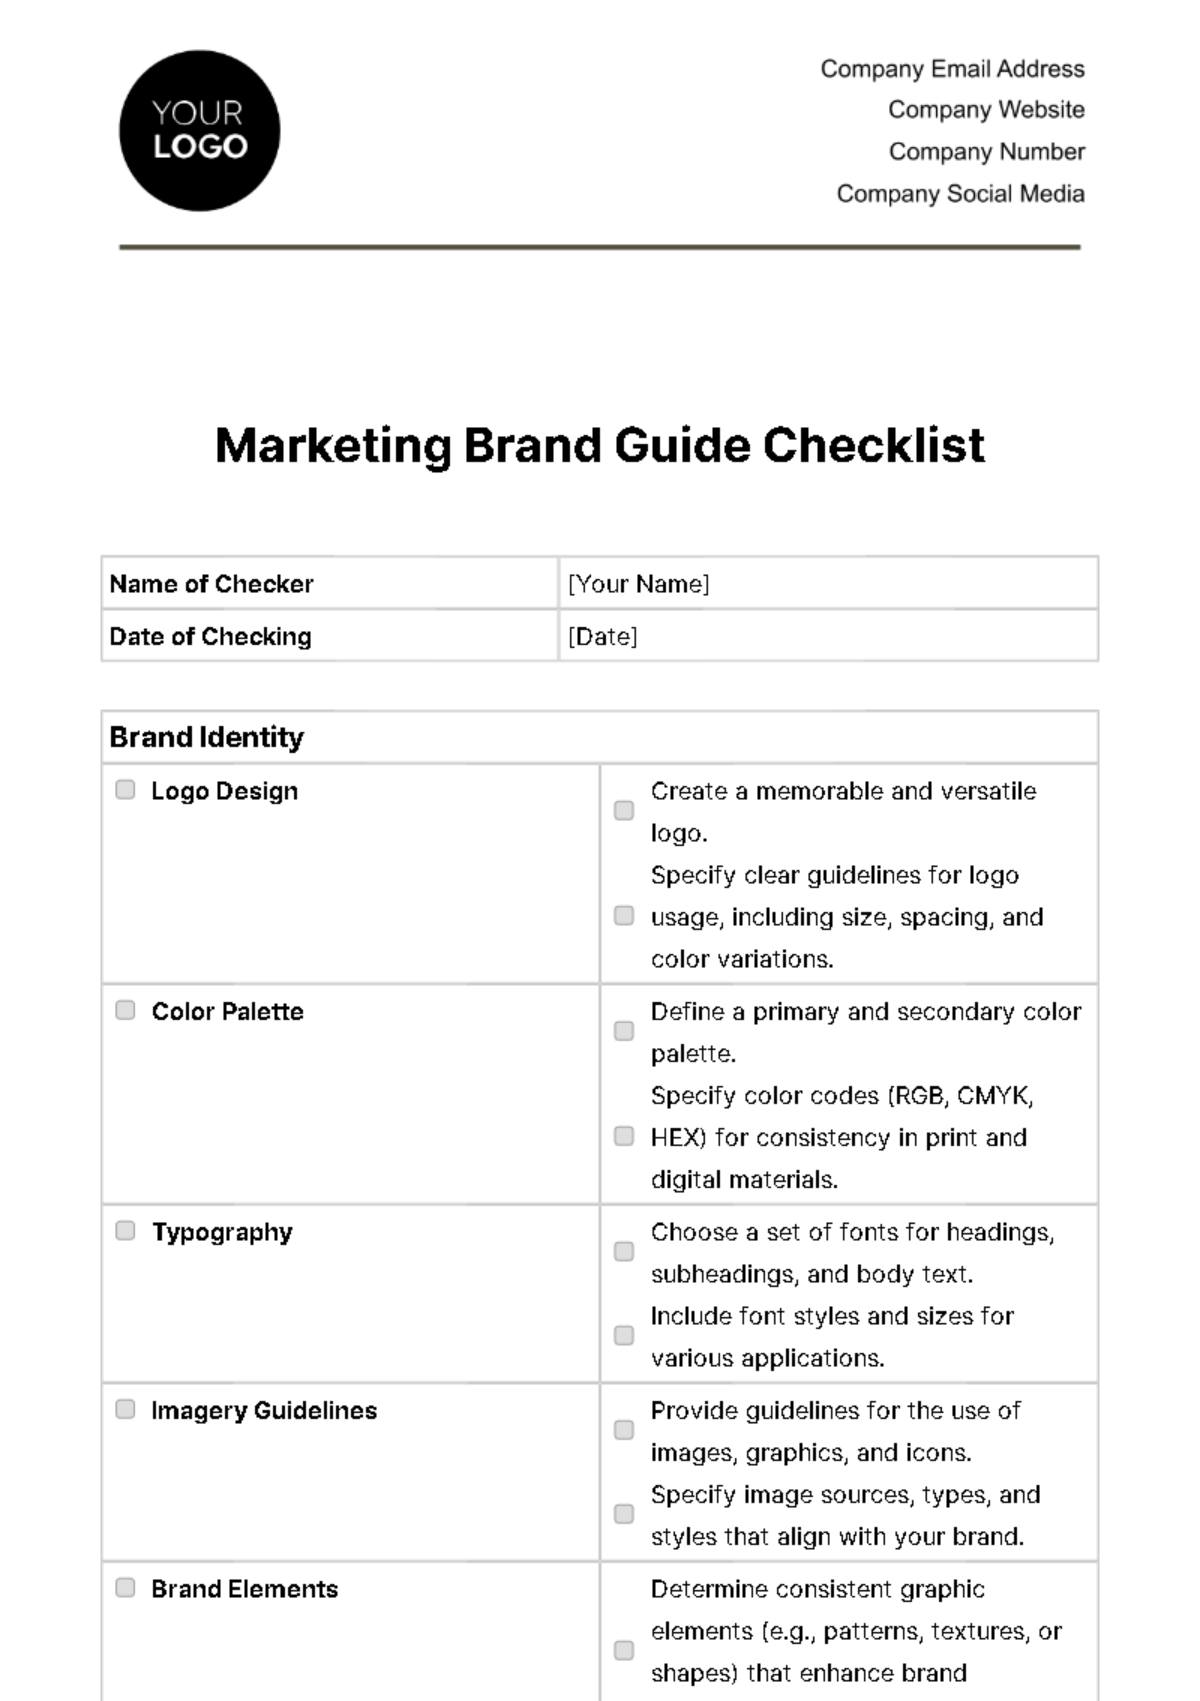 Free Marketing Brand Guide Checklist Template